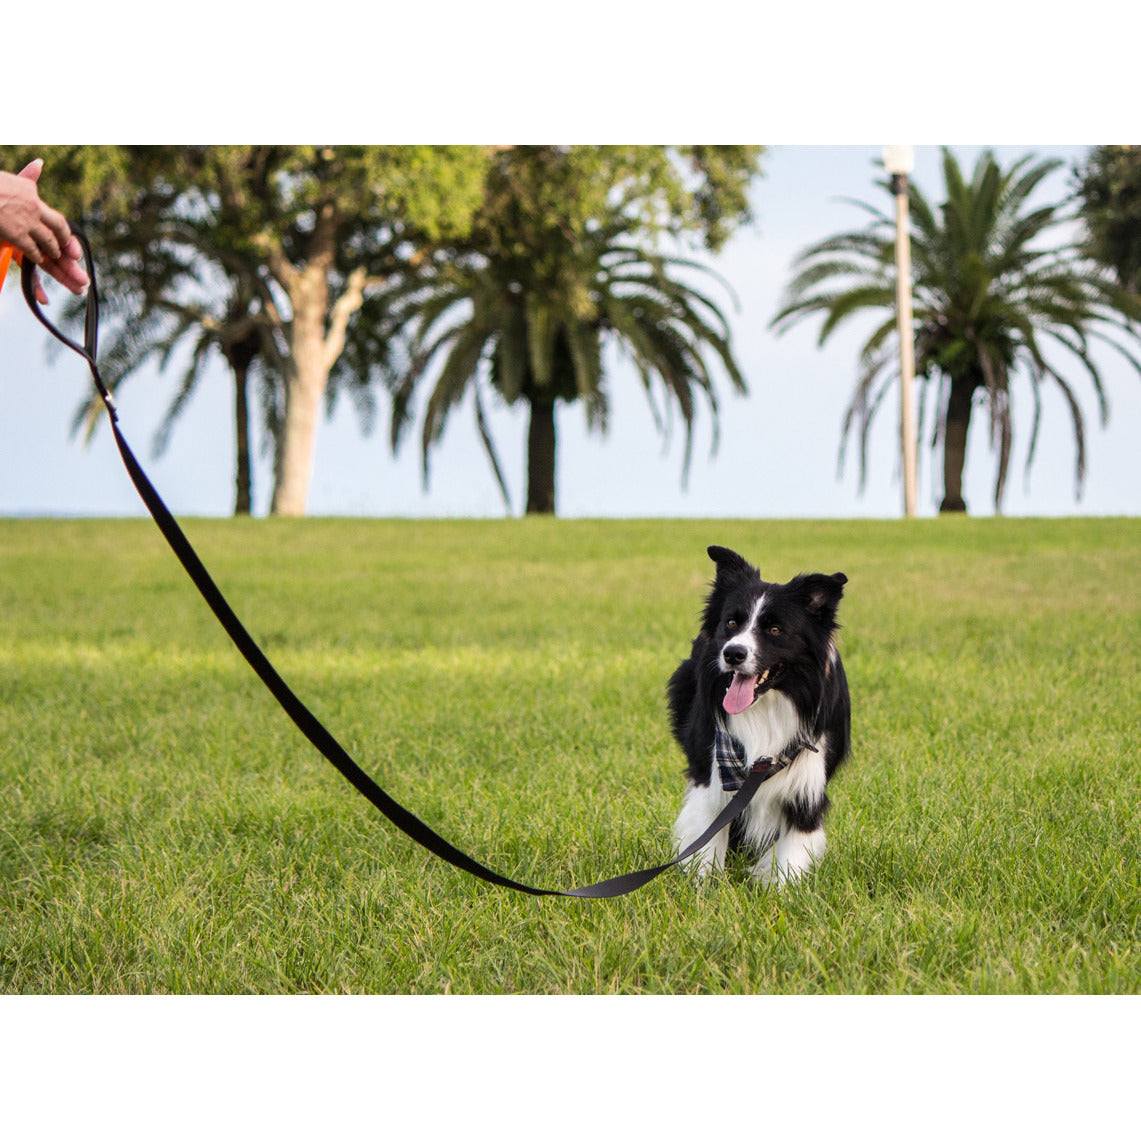 10 ft dog leash